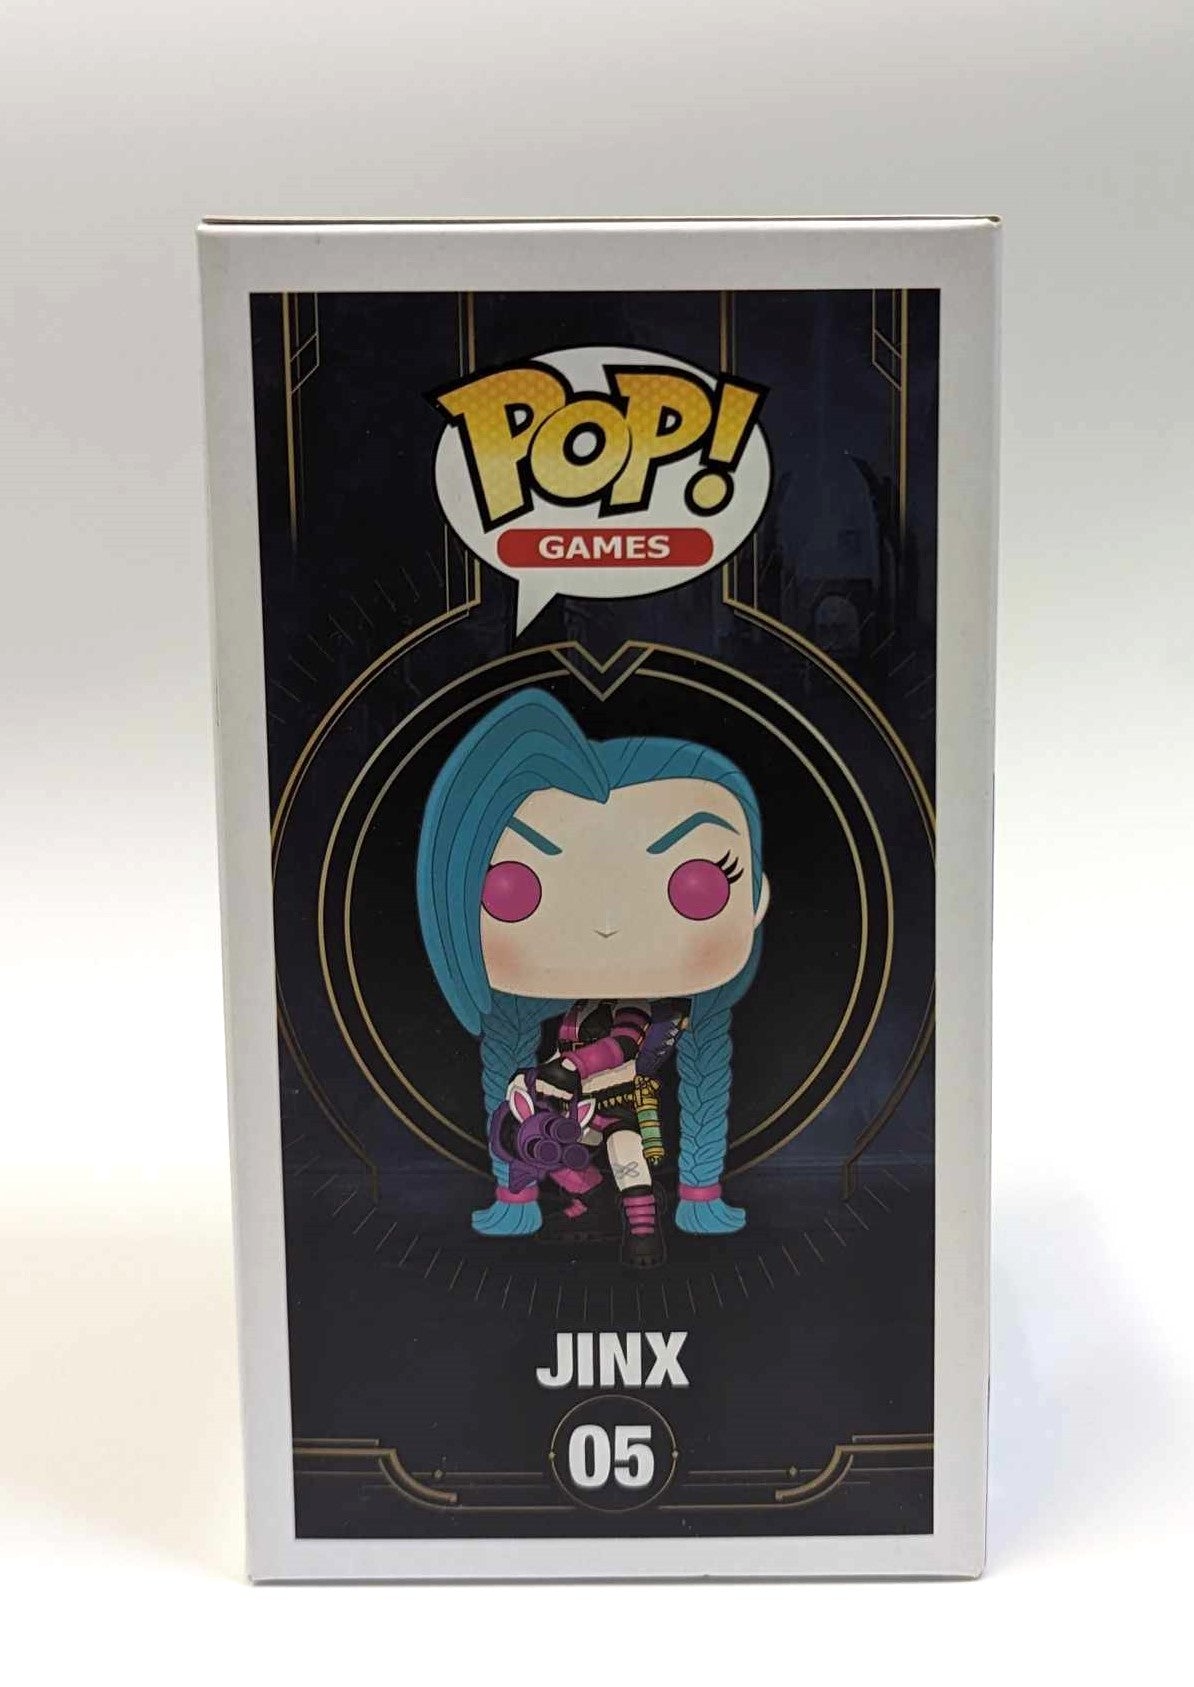 Games - Jinx 05 POP! (League of Legends)